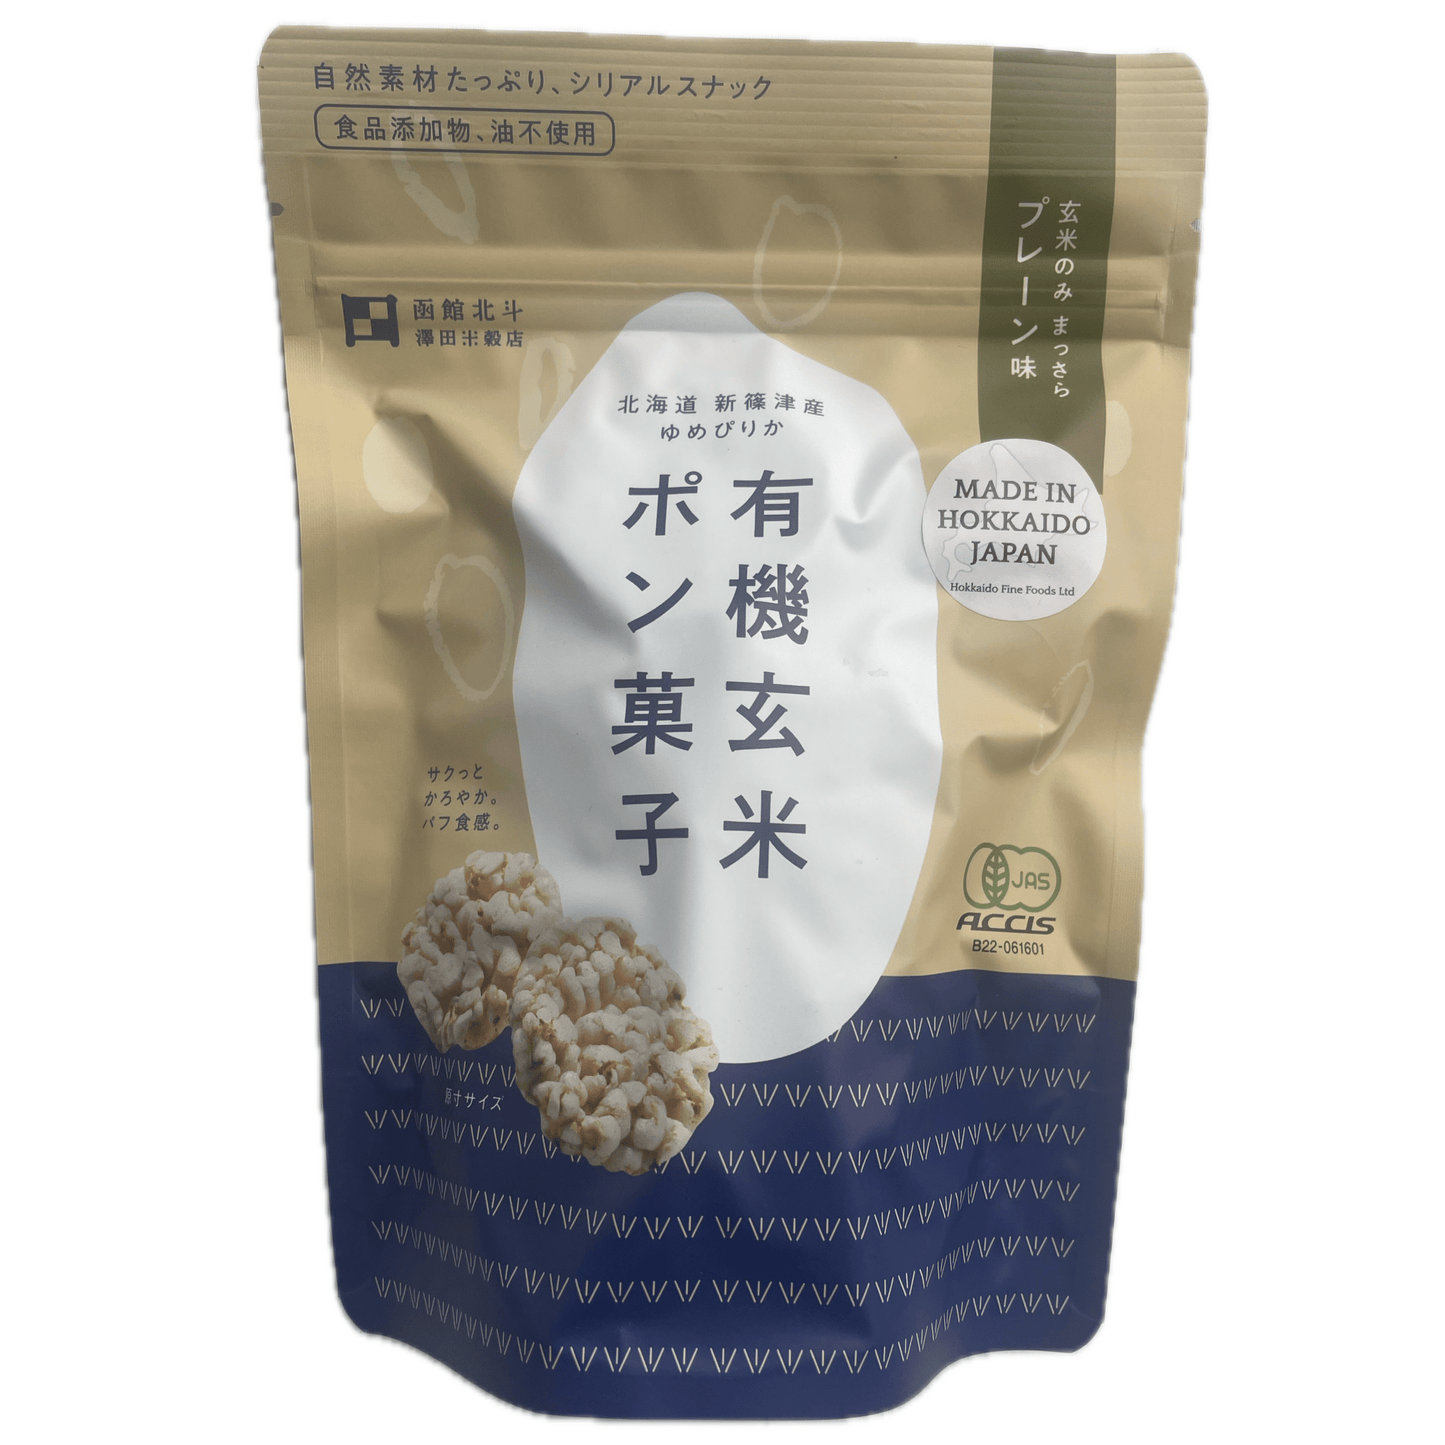 Sawada Brown Rice Cakes Plain 30g / 澤田米穀店 有機玄米ポン菓子 プレーン味 30g - RiceWineShop